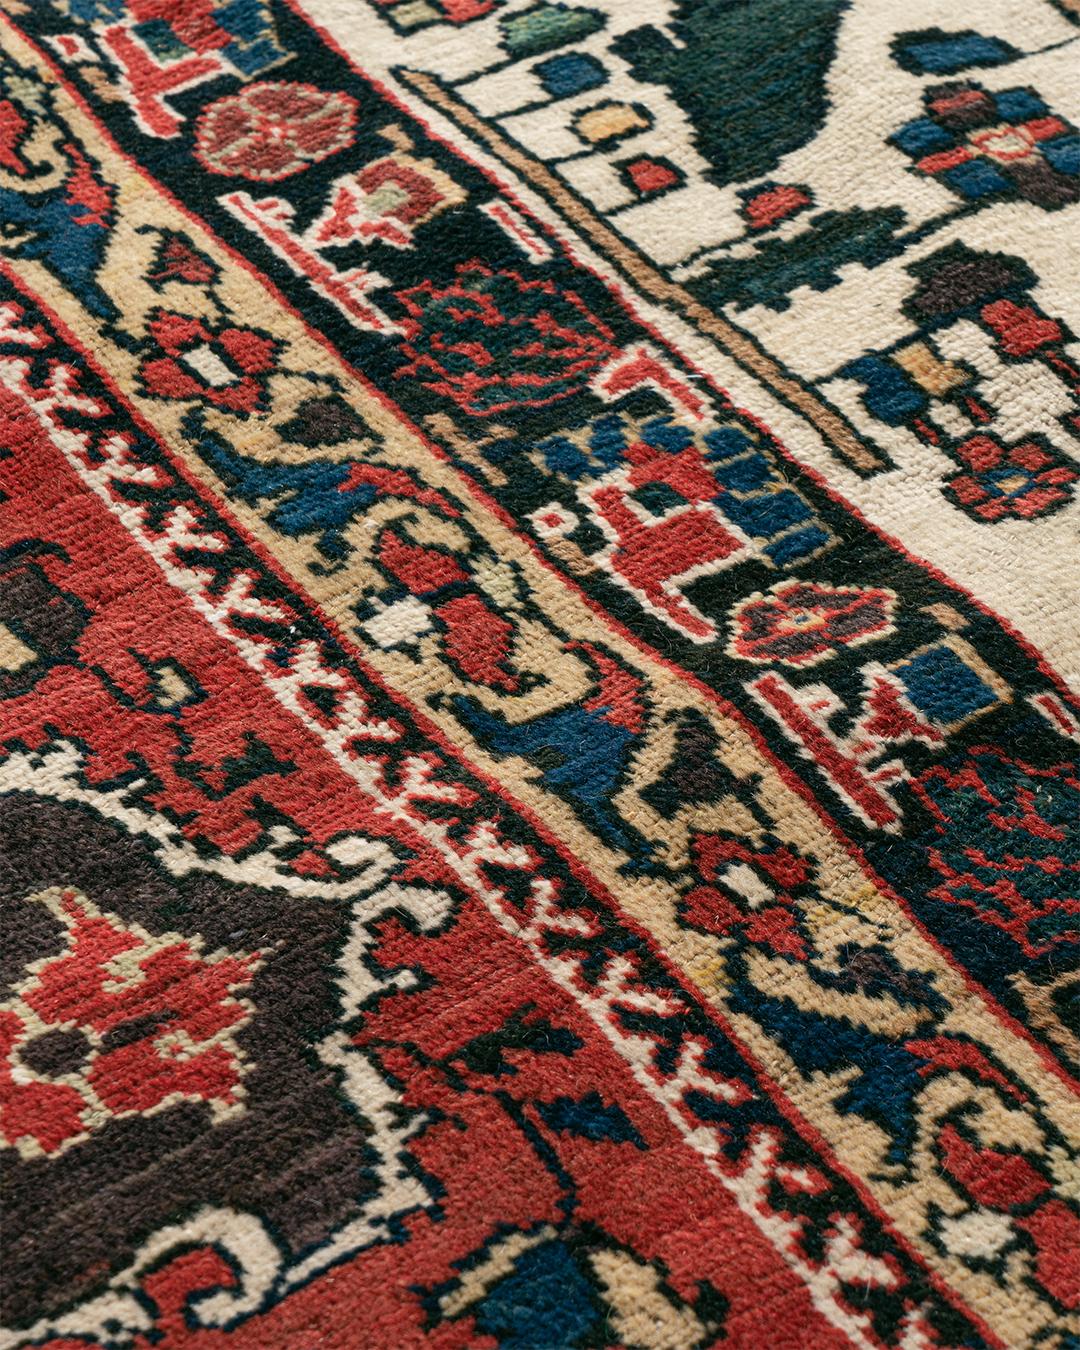 Oversize Antique Persian Baktiari Rug, circa 1890  12' x 18'10 For Sale 5